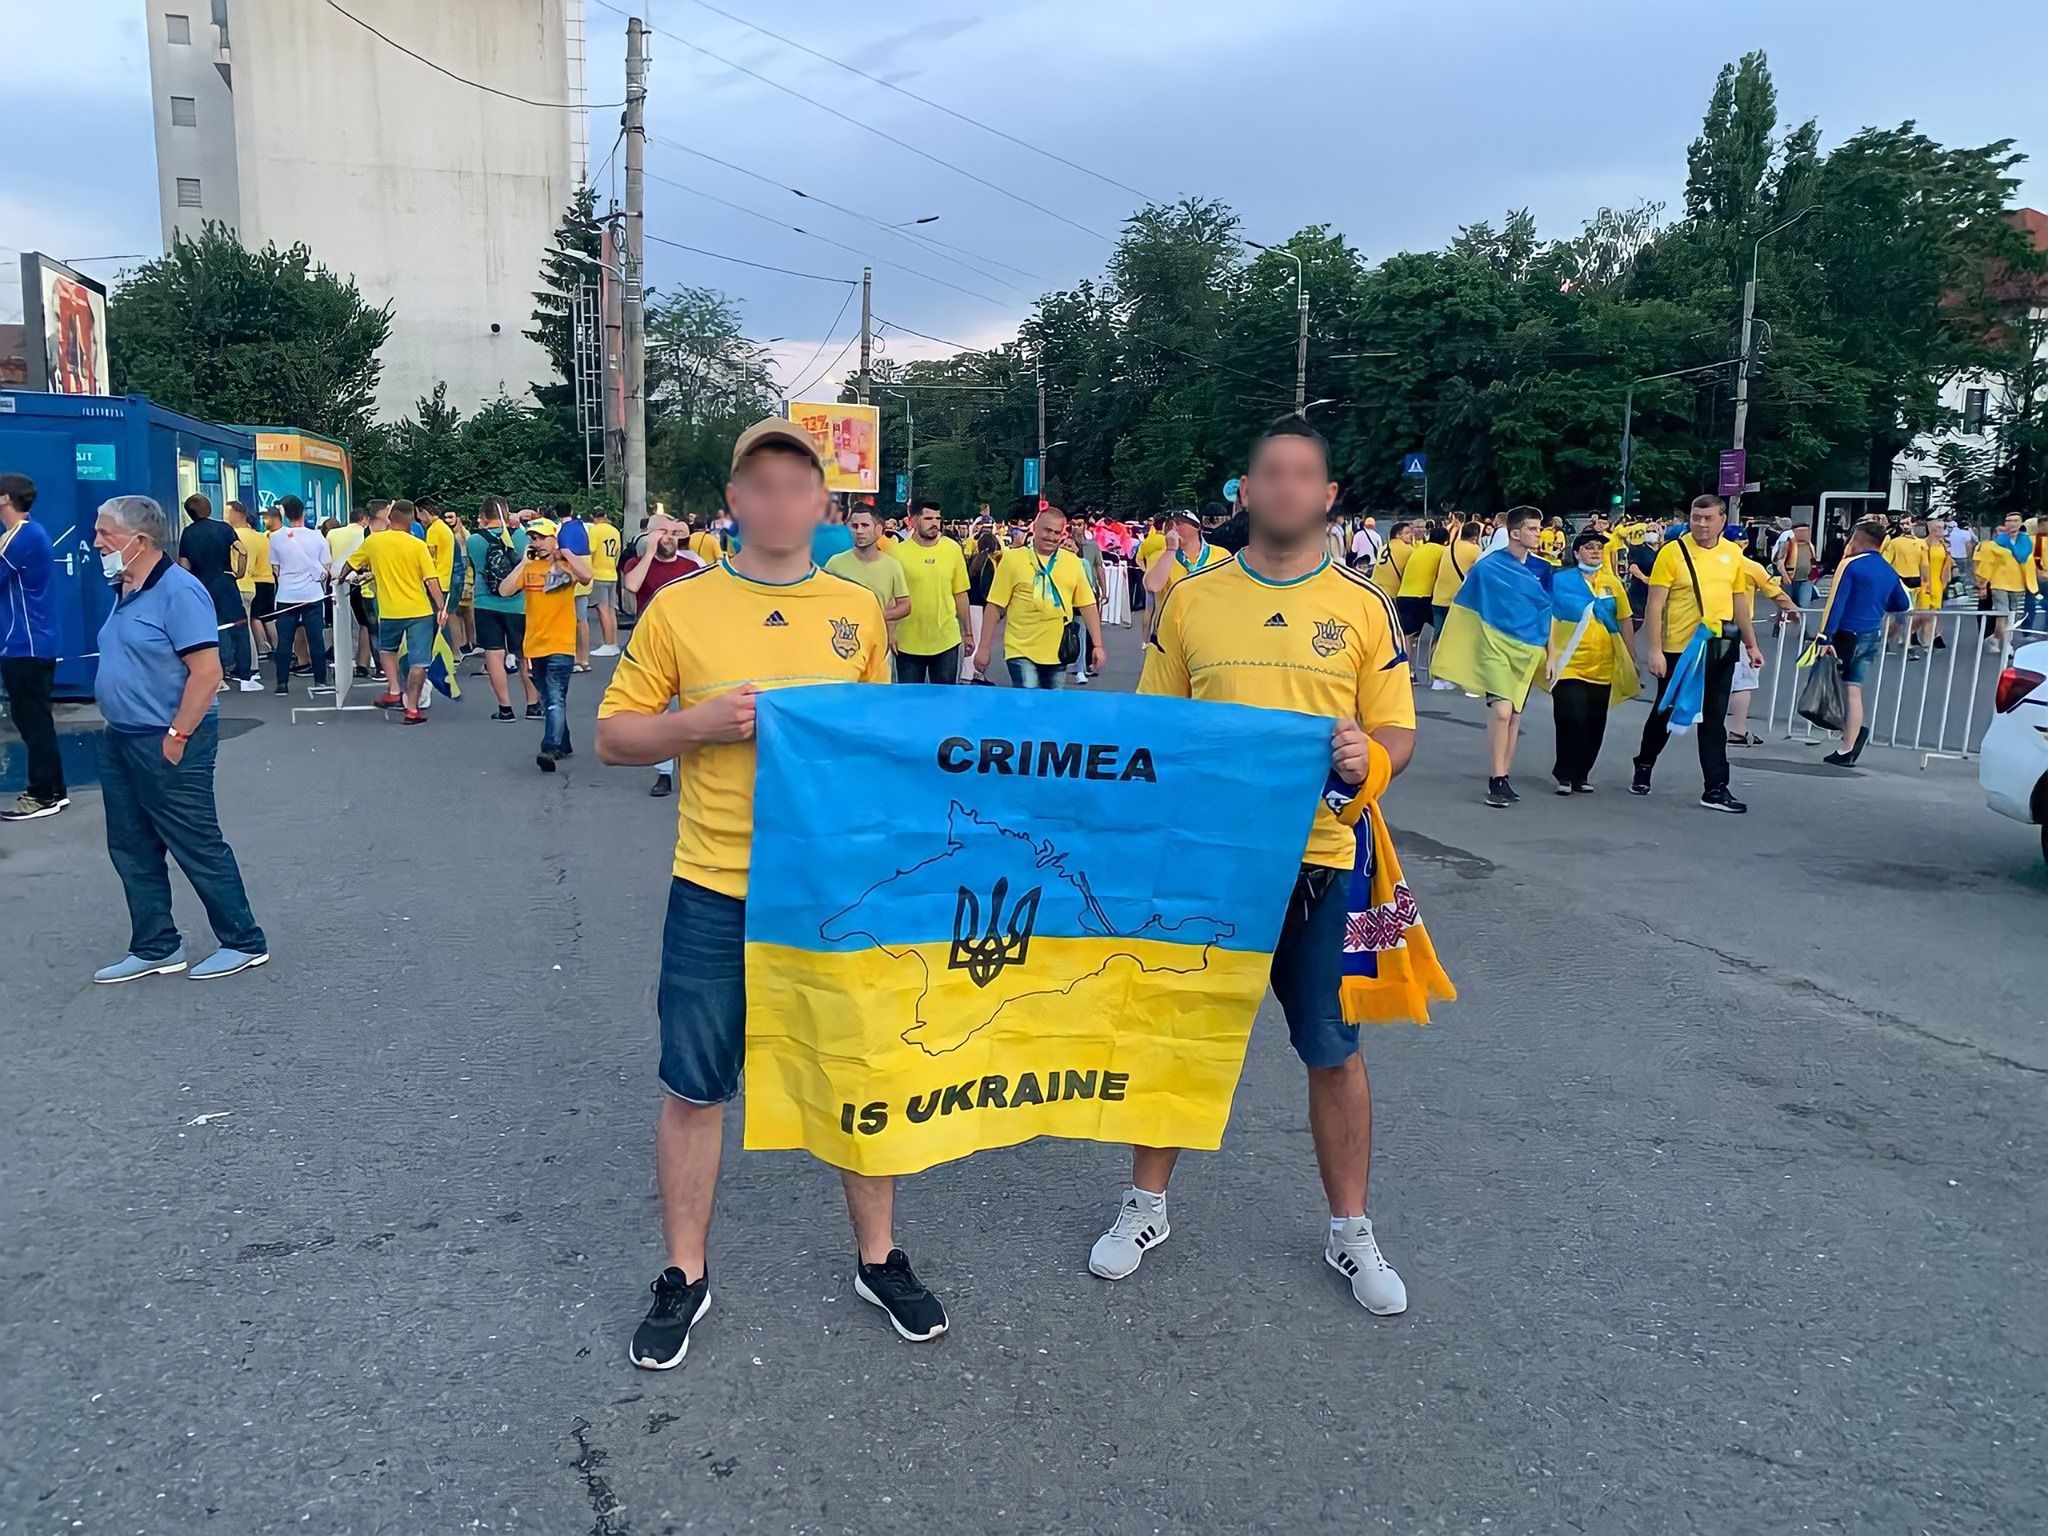 Через флаг с картой Крыма: украинцев в Бухаресте не пускали на матч